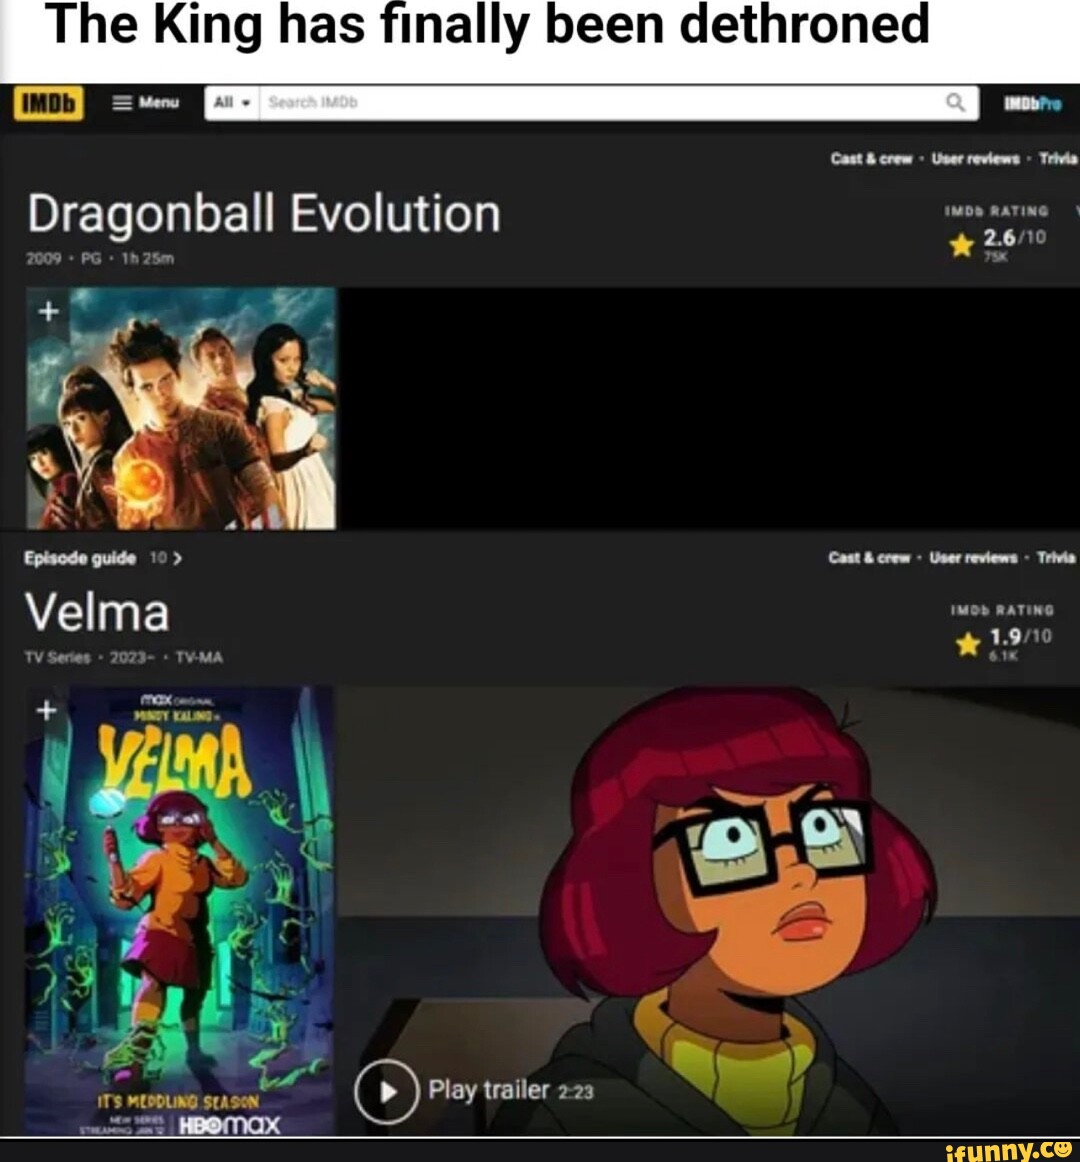 Cast User reviews Dragonball Evolution 2009 1h25m Velma Cast ceow User  reviews Trivia RATING - iFunny Brazil